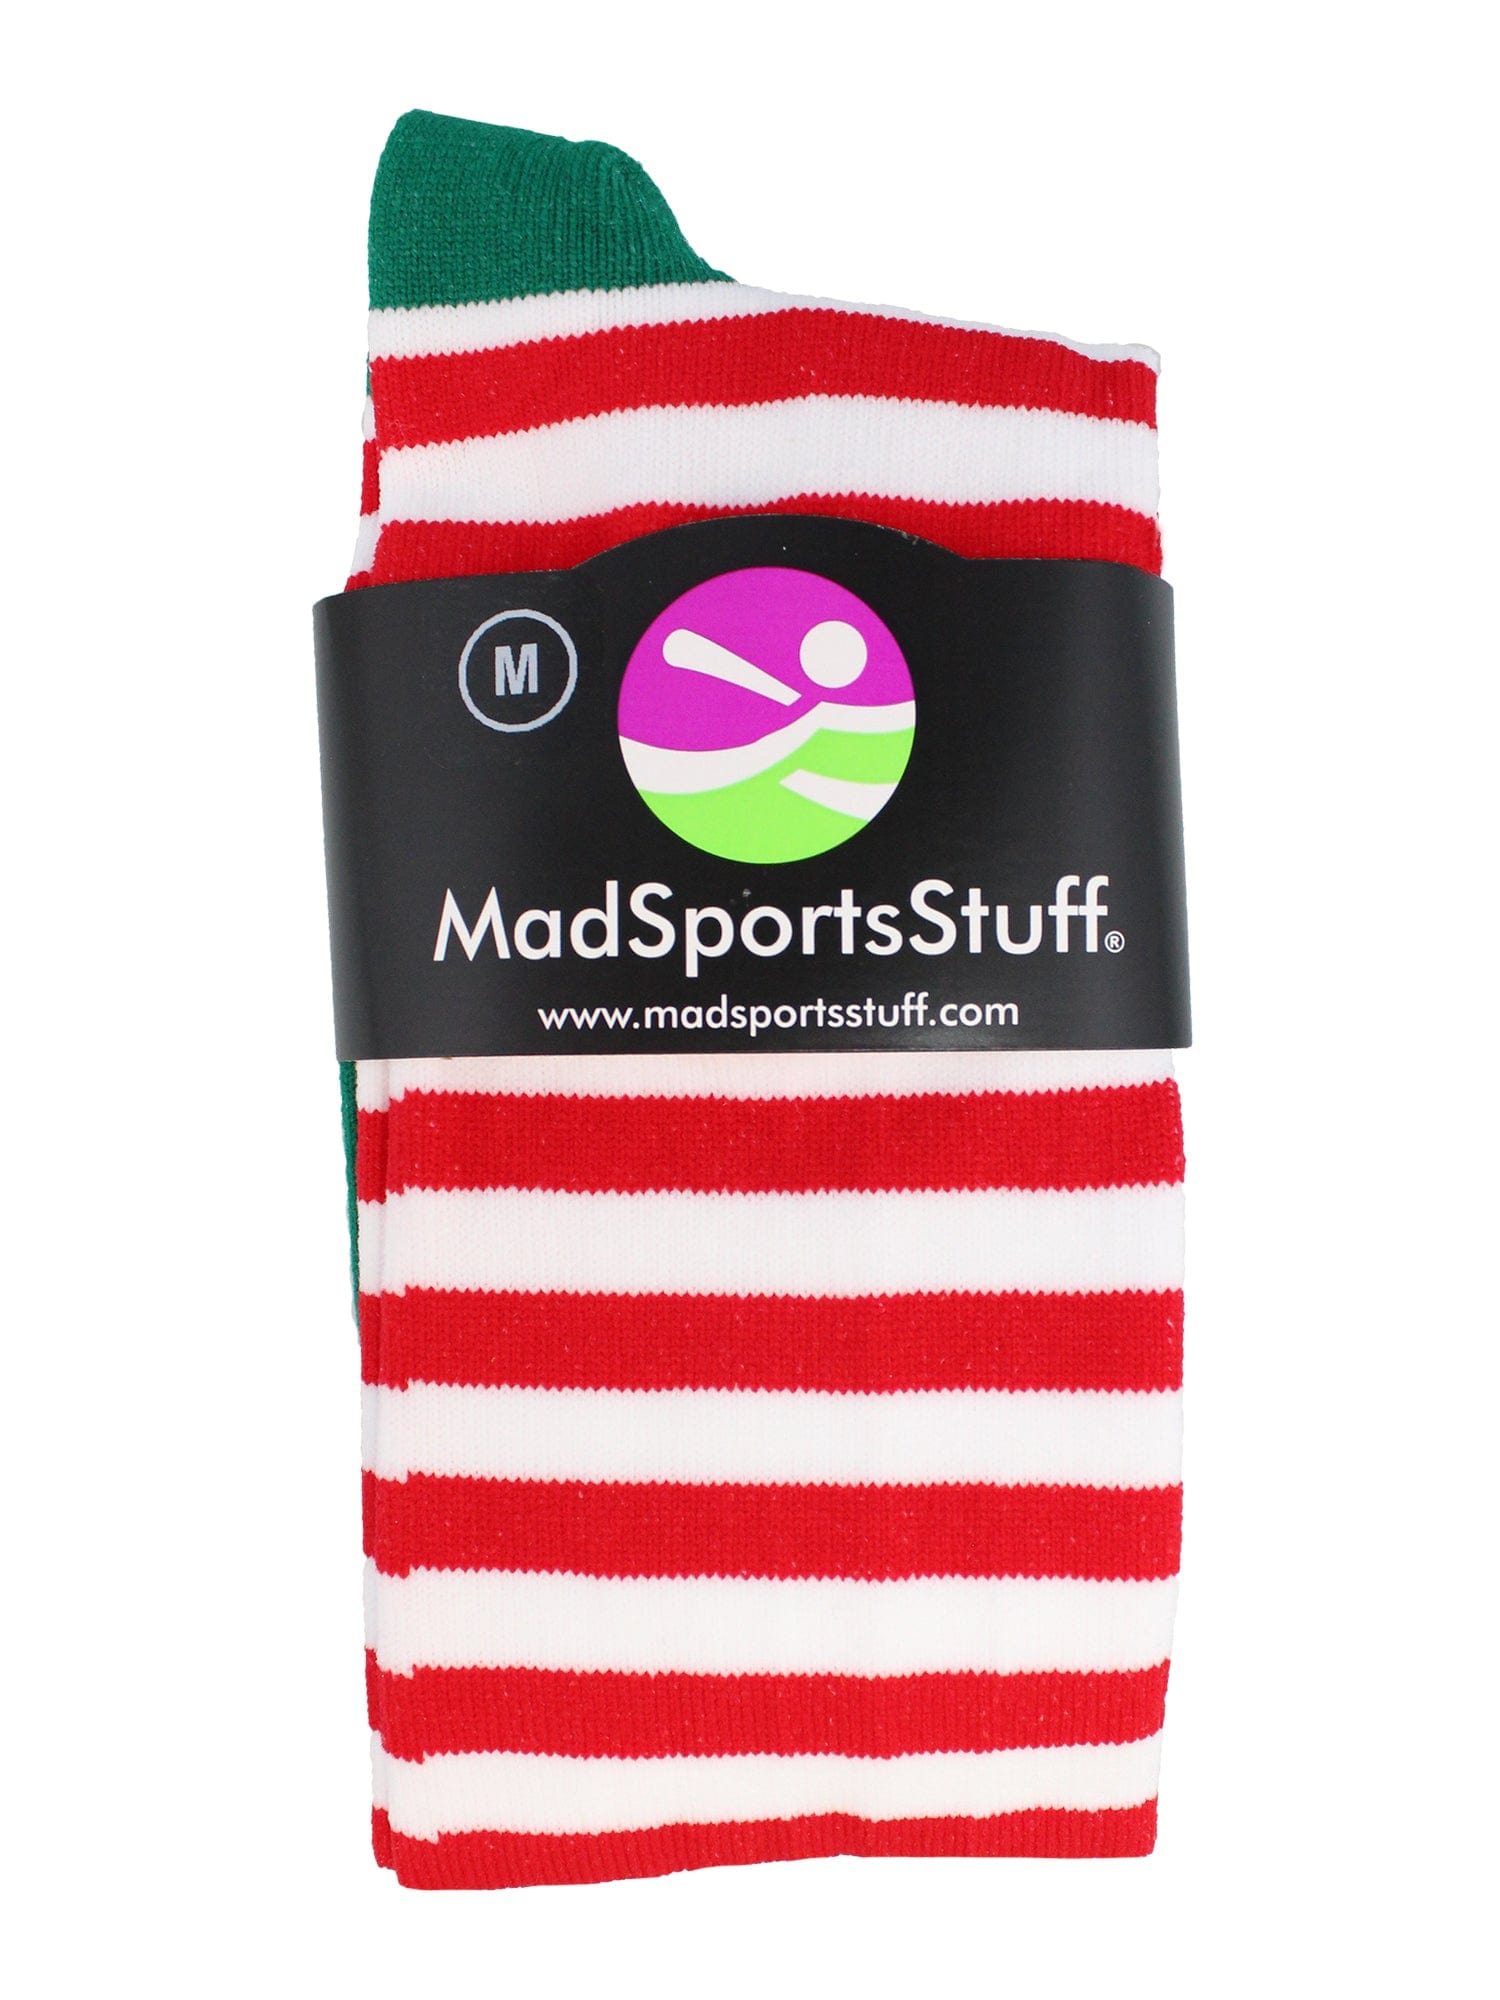 Two Sox CHECK YOUR ELF Christmas Socks Mens Crew Socks Size 10-13